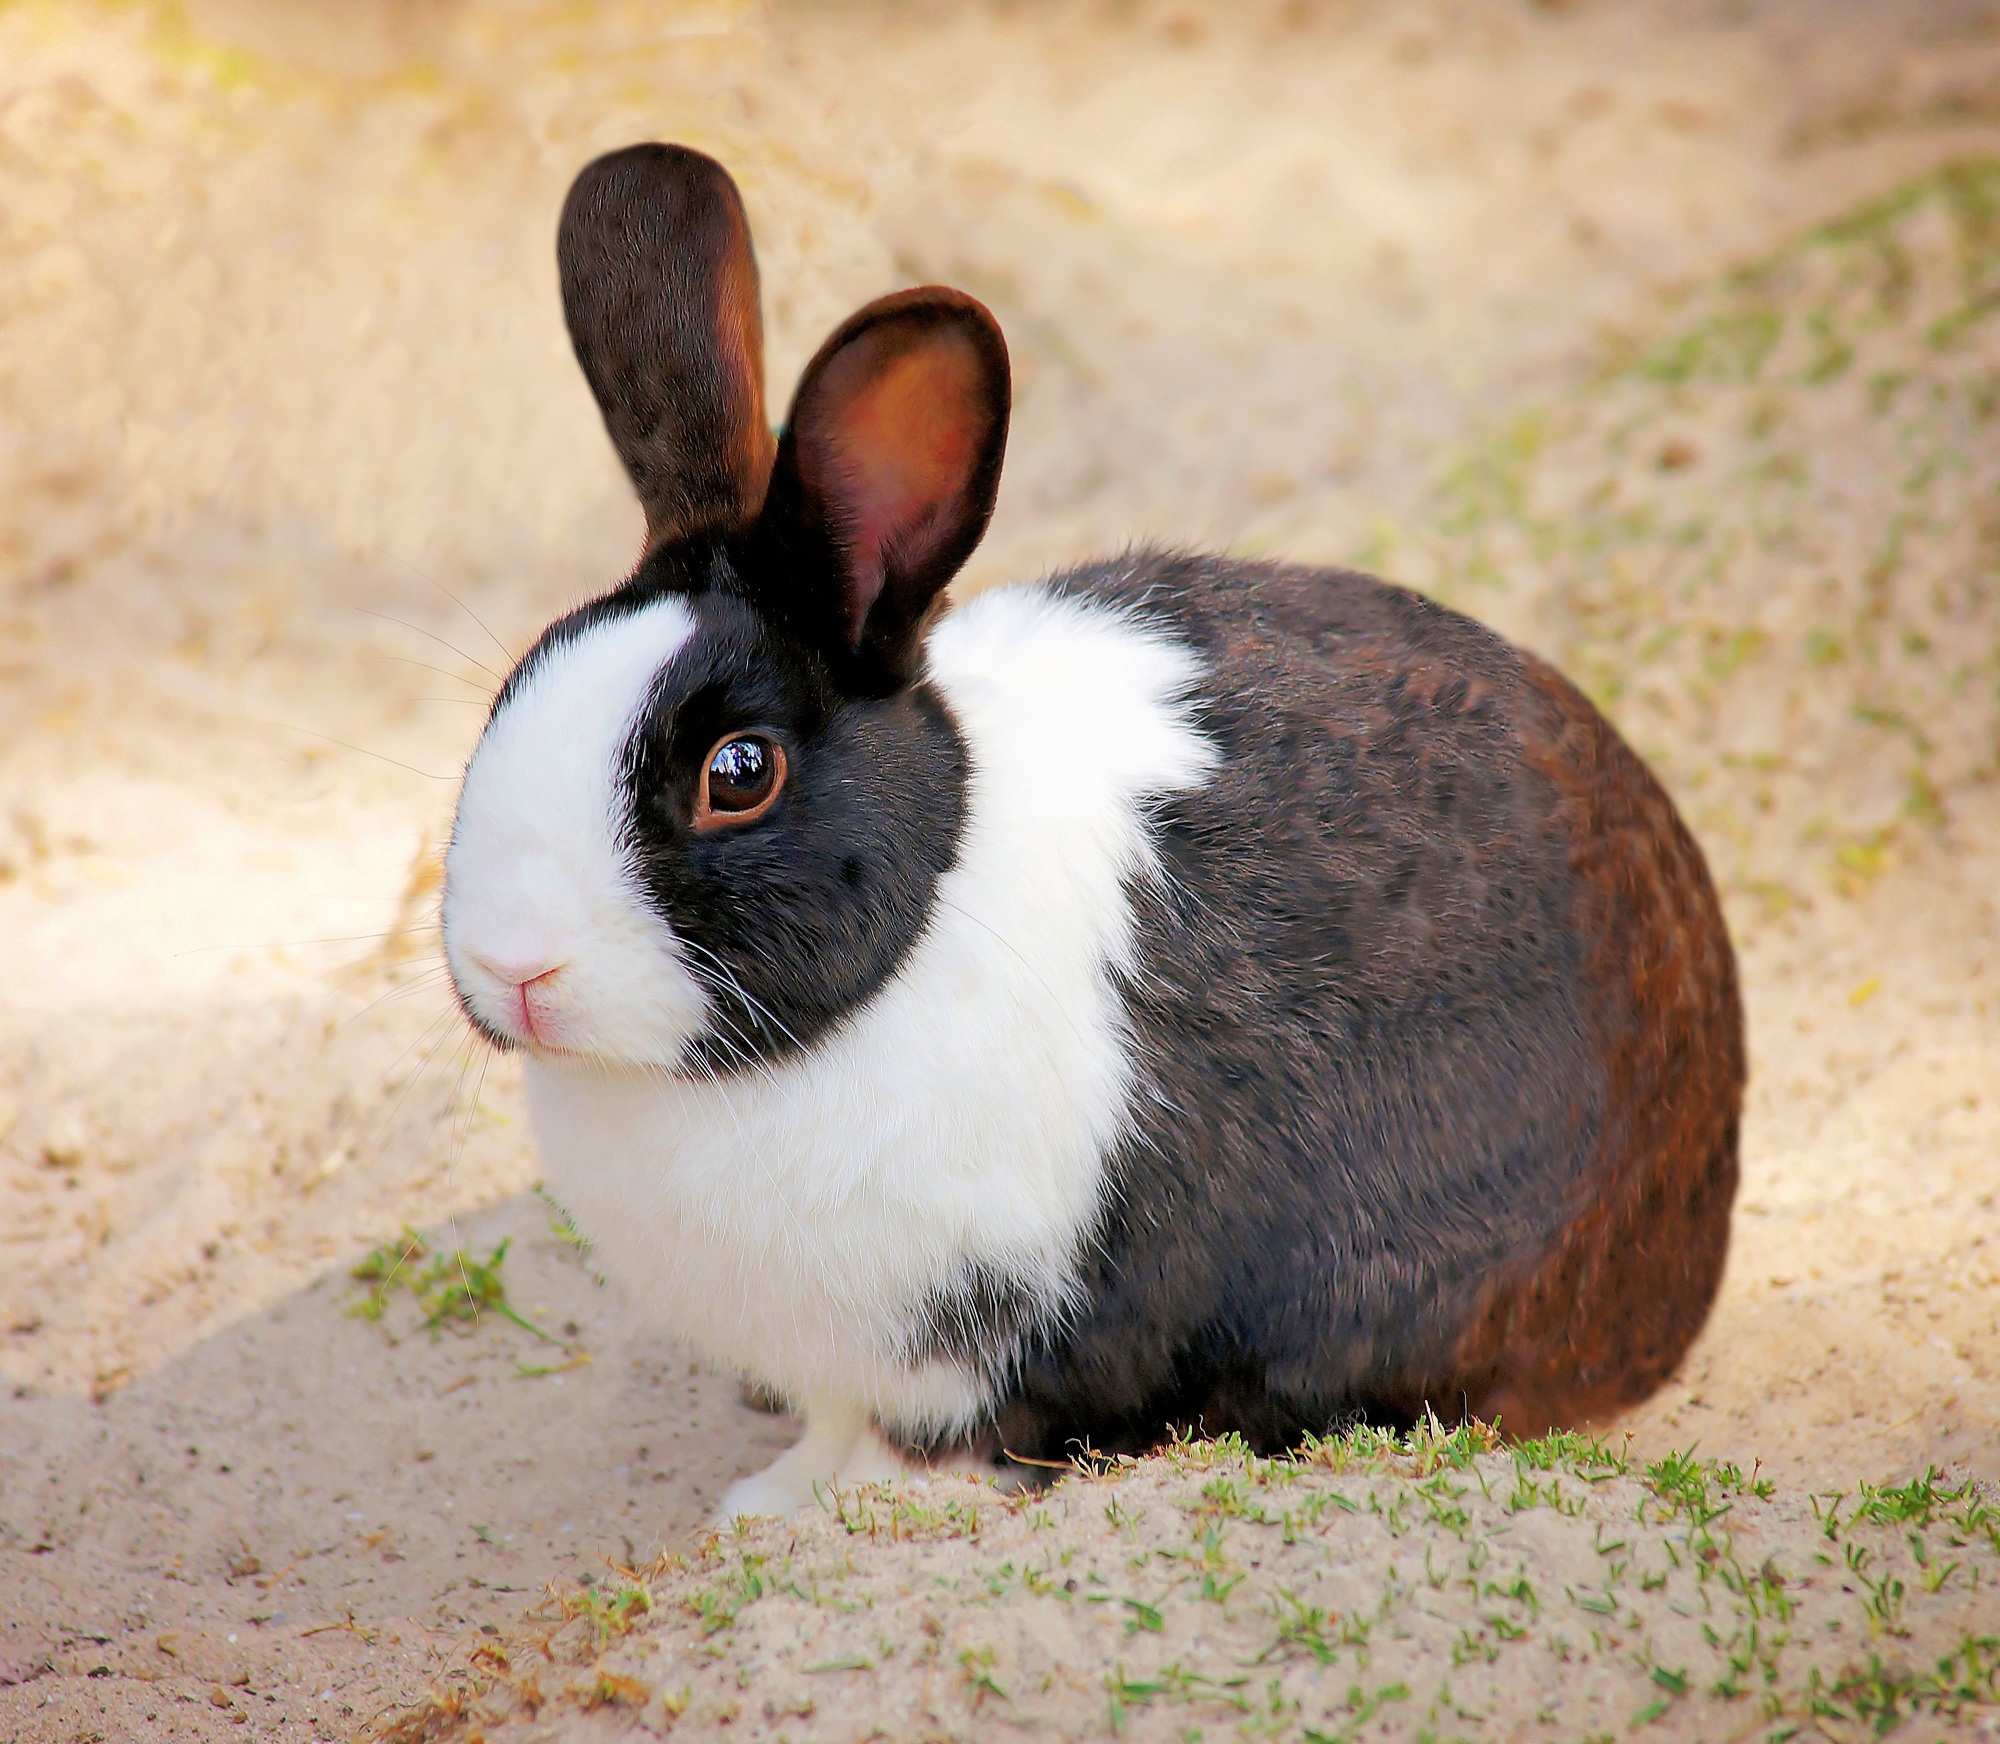 Rabbit, Adorable, Animal, Cute, Fast, HQ Photo